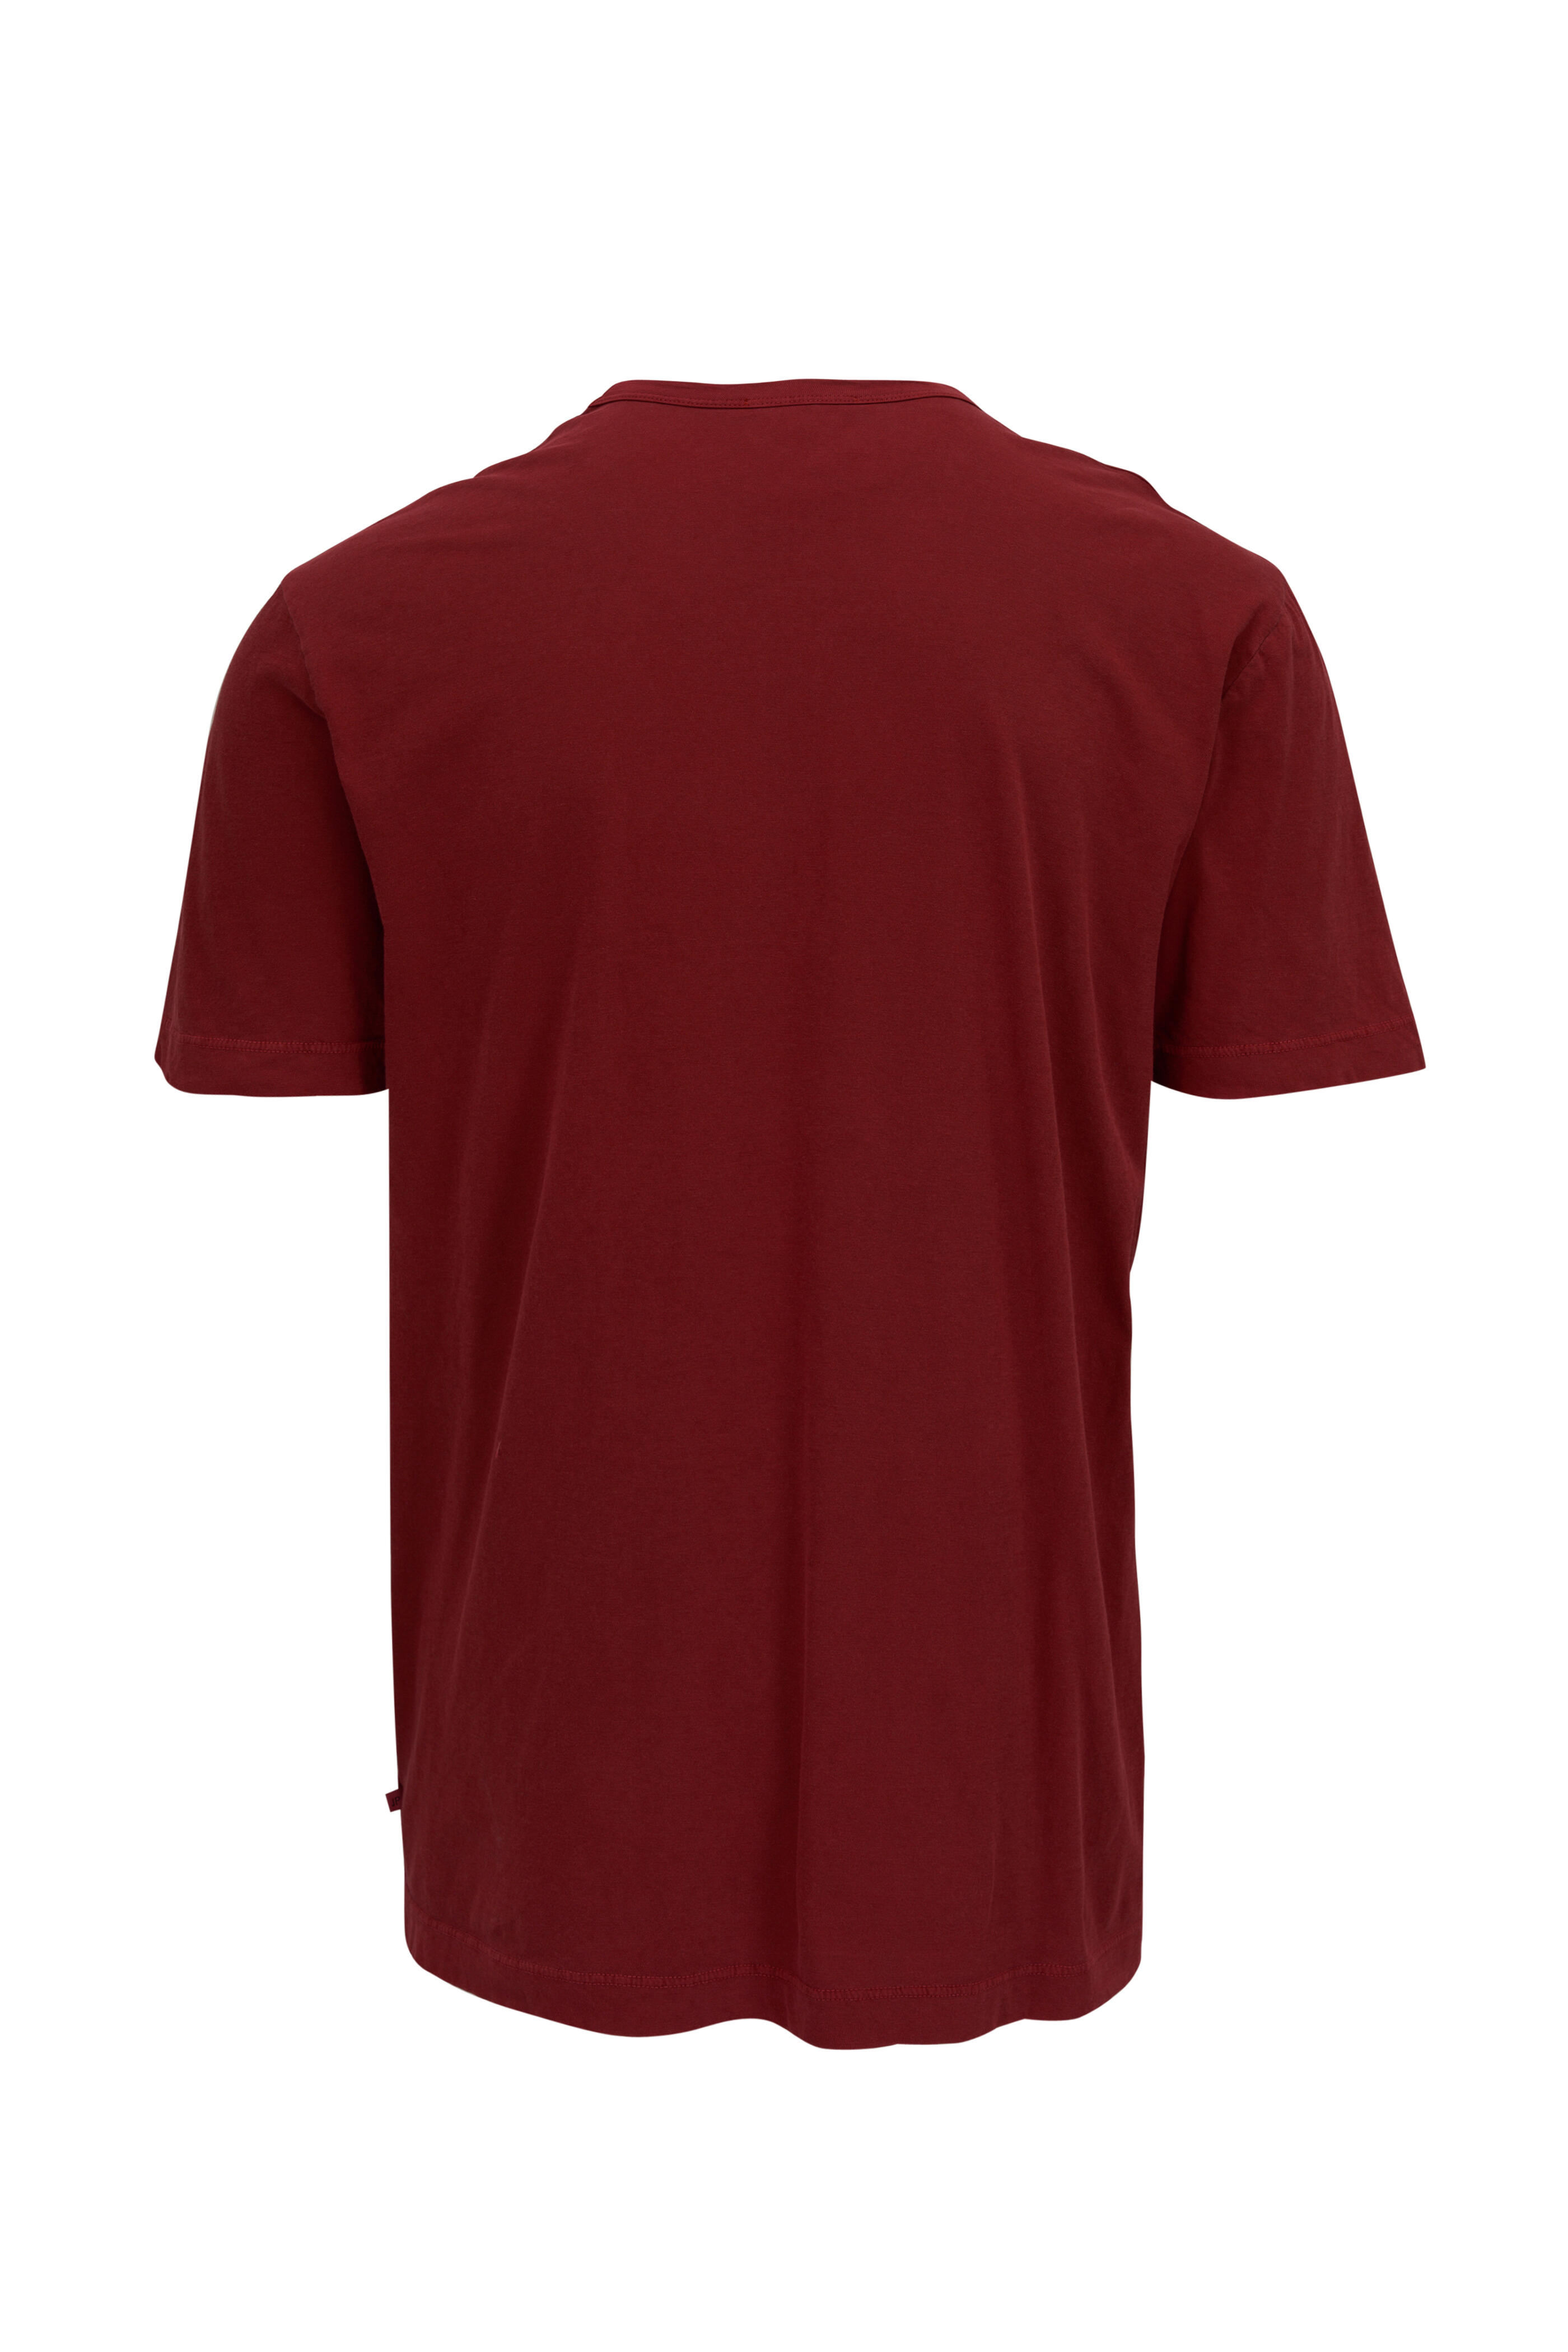 James Perse - Sunfire Brick Cotton Crewneck T-Shirt